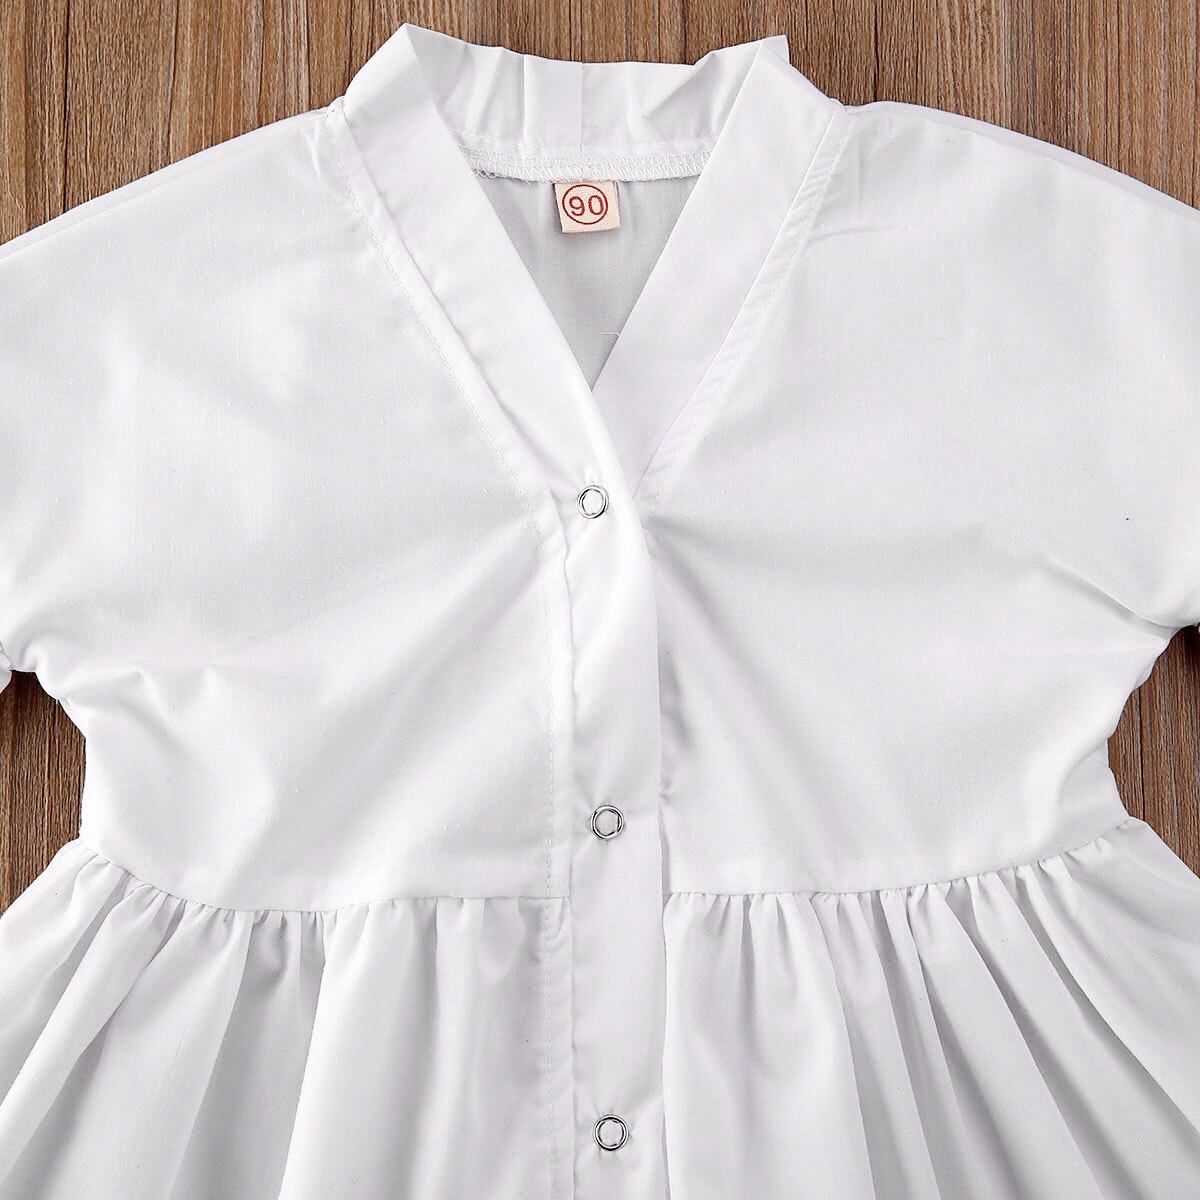 Pudcoco toddler baby pige tøj ensfarvet puff langærmet skjorte toppe talje bindende tøj tøj 1-6y